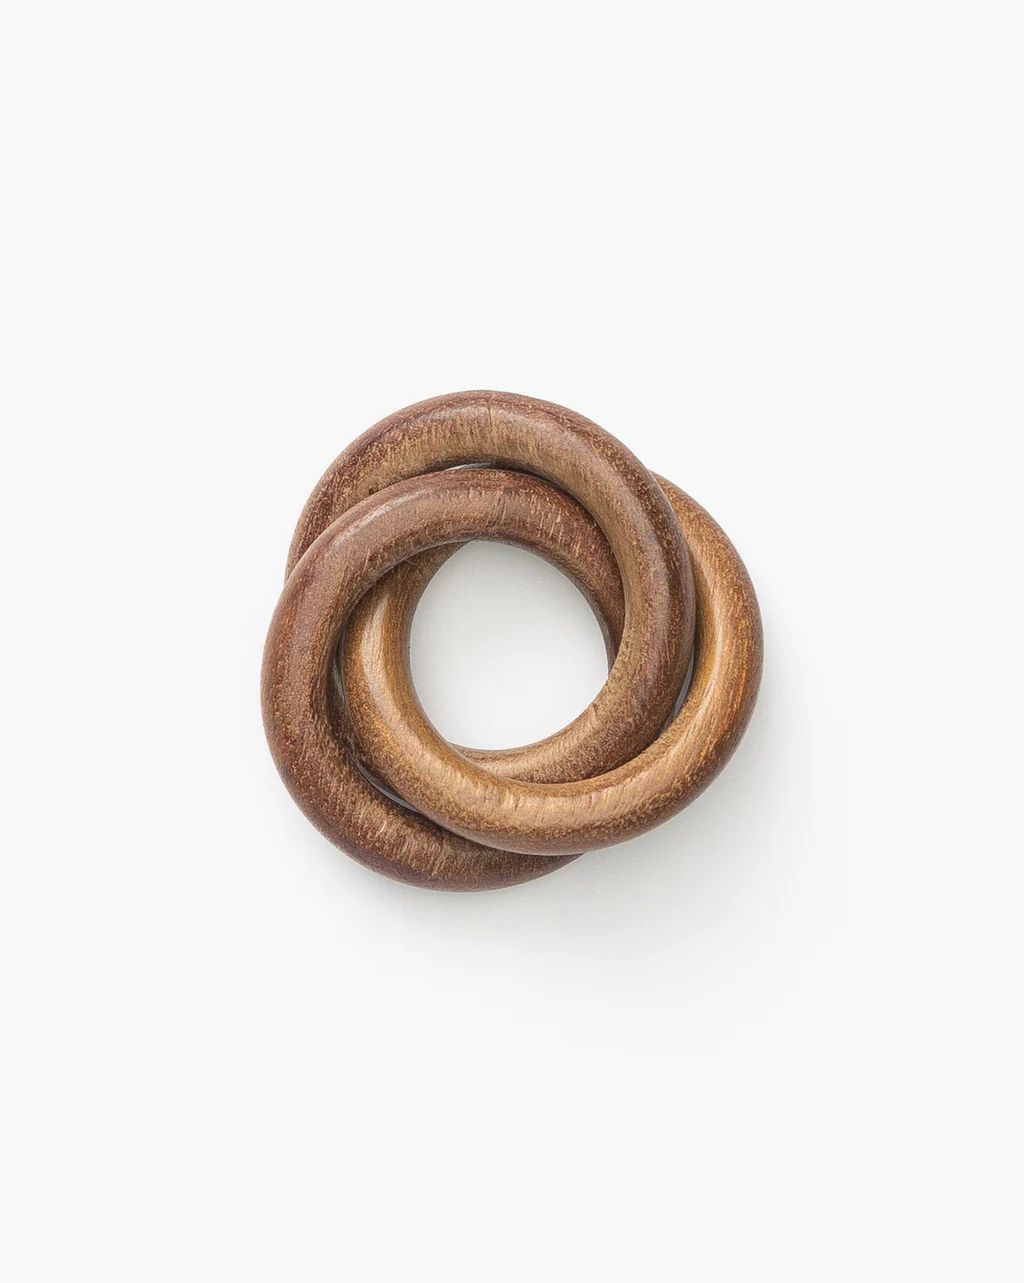 Wooden Interlocked Napkin Ring | McGee & Co.